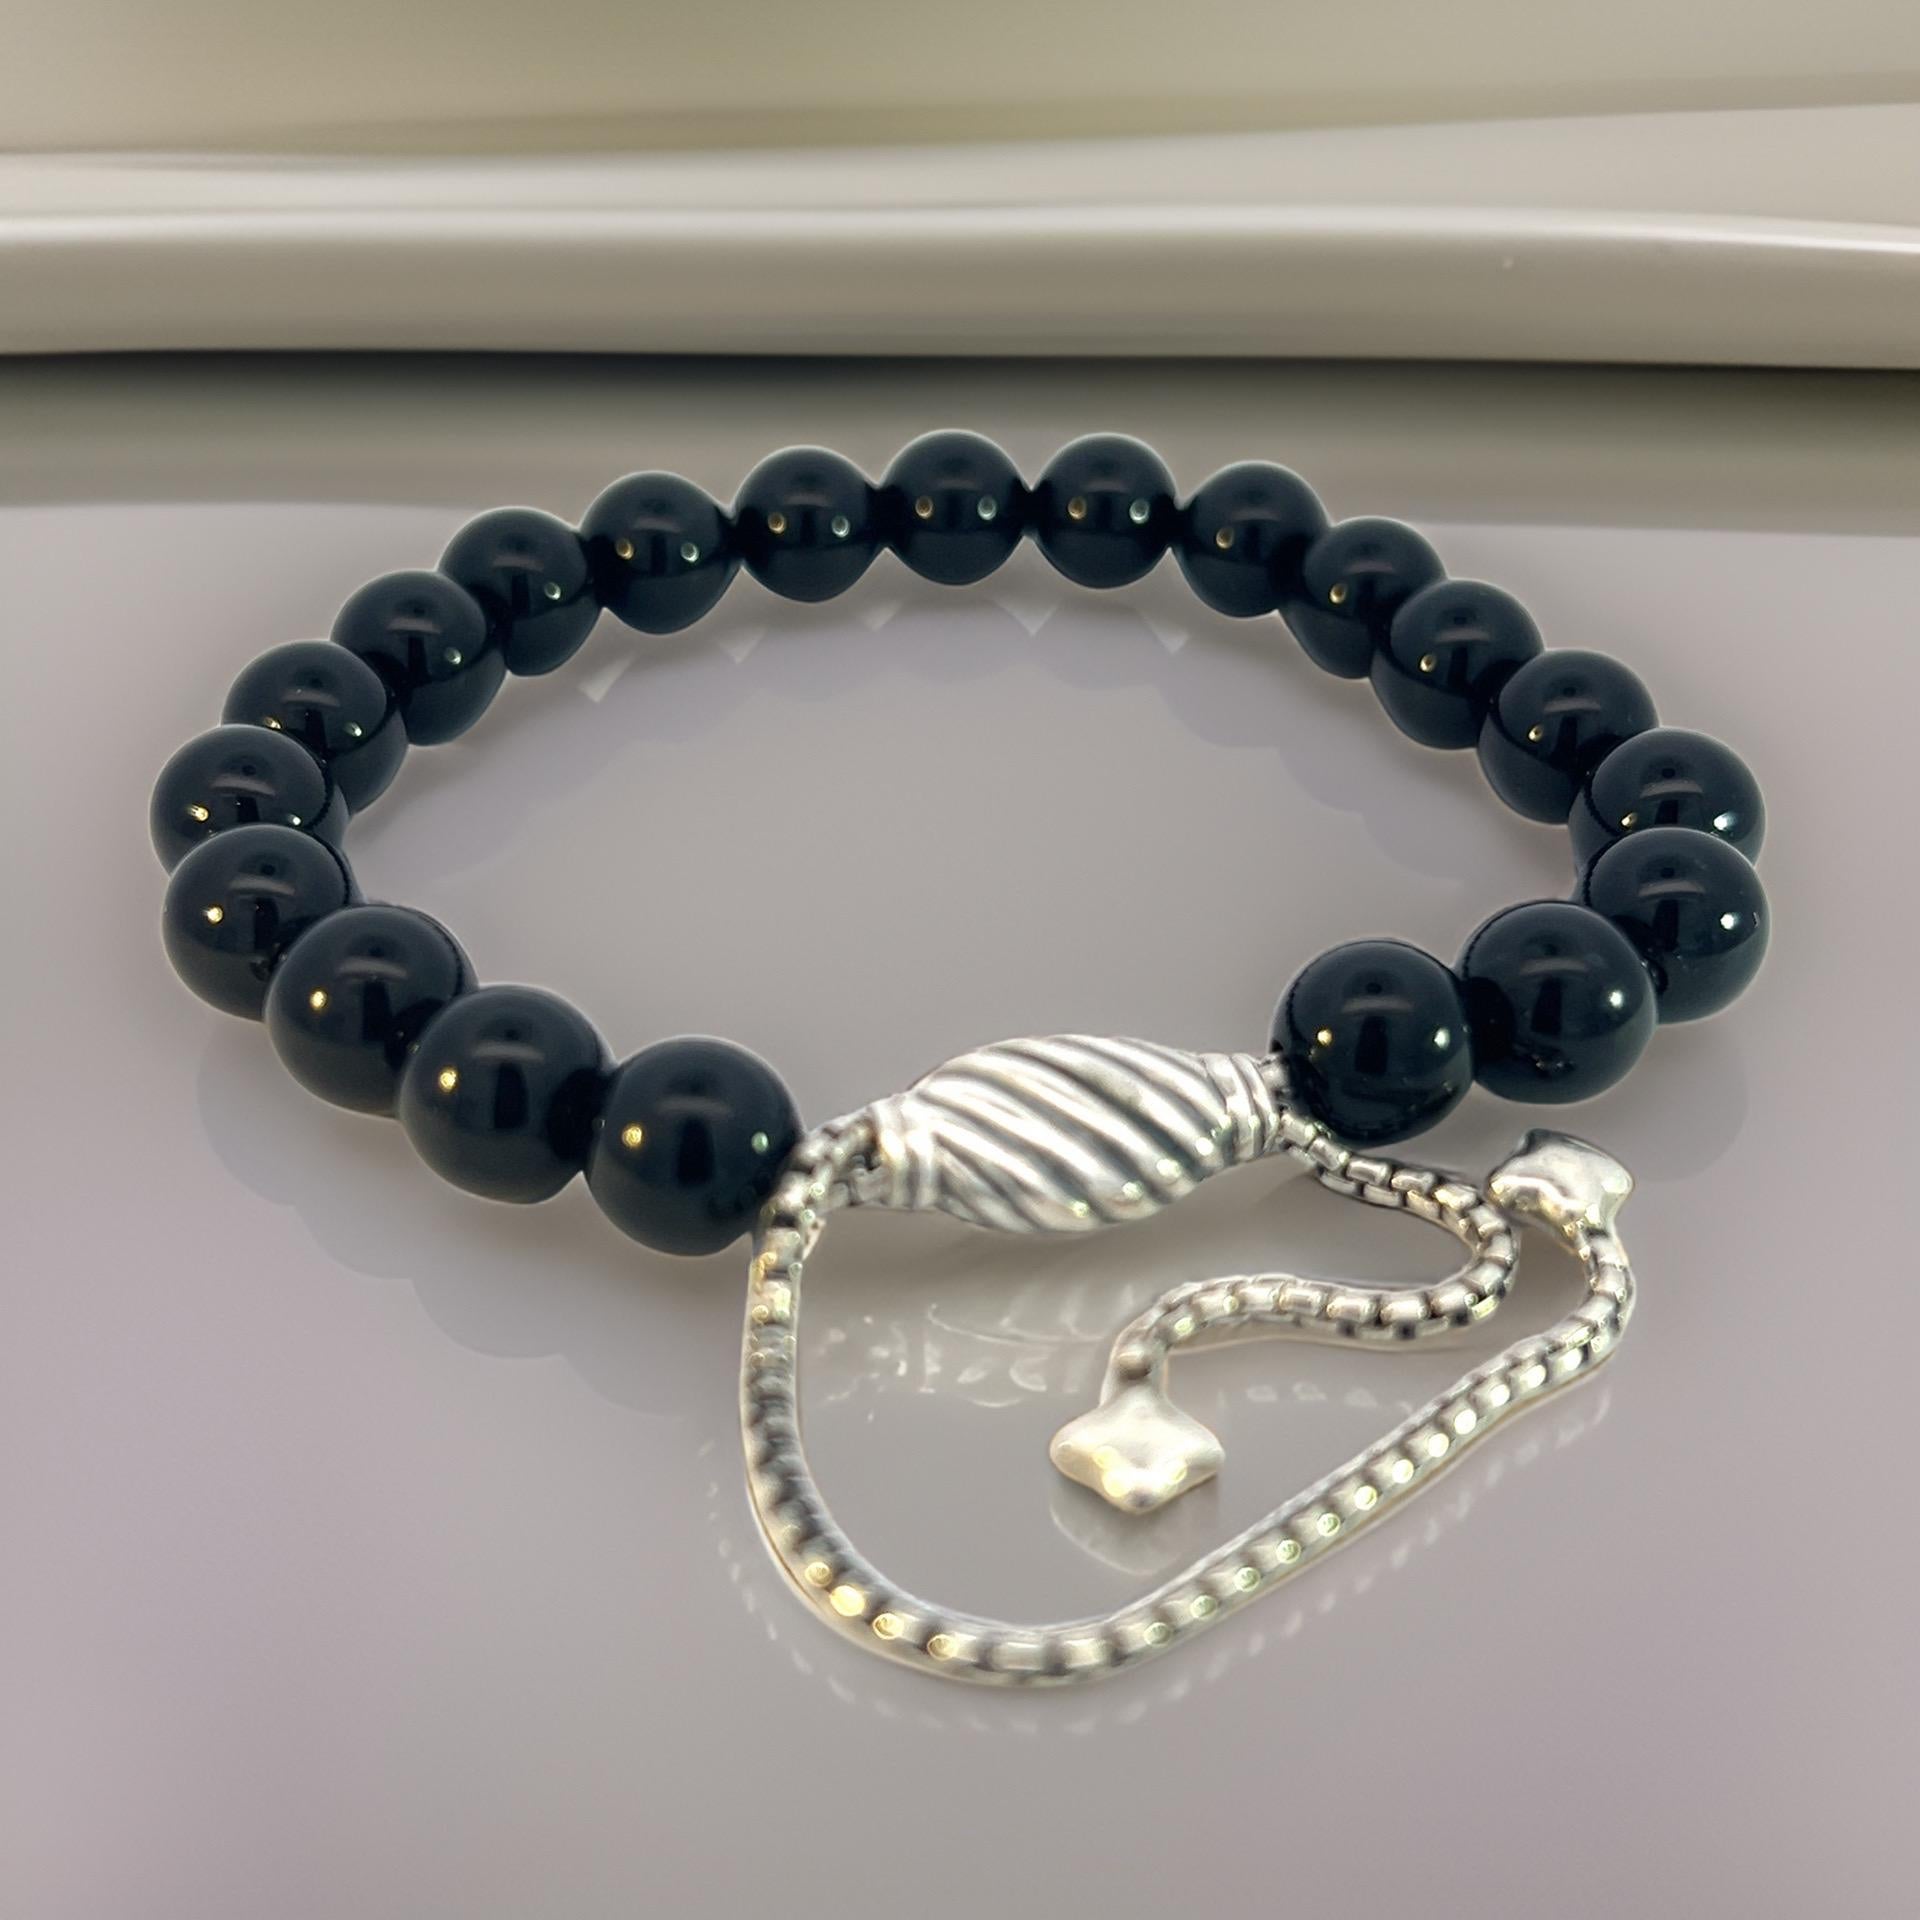 Authentic David Yurman Estate Black Onyx Polished Spiritual Beads Bracelet 6.6 - 8.5